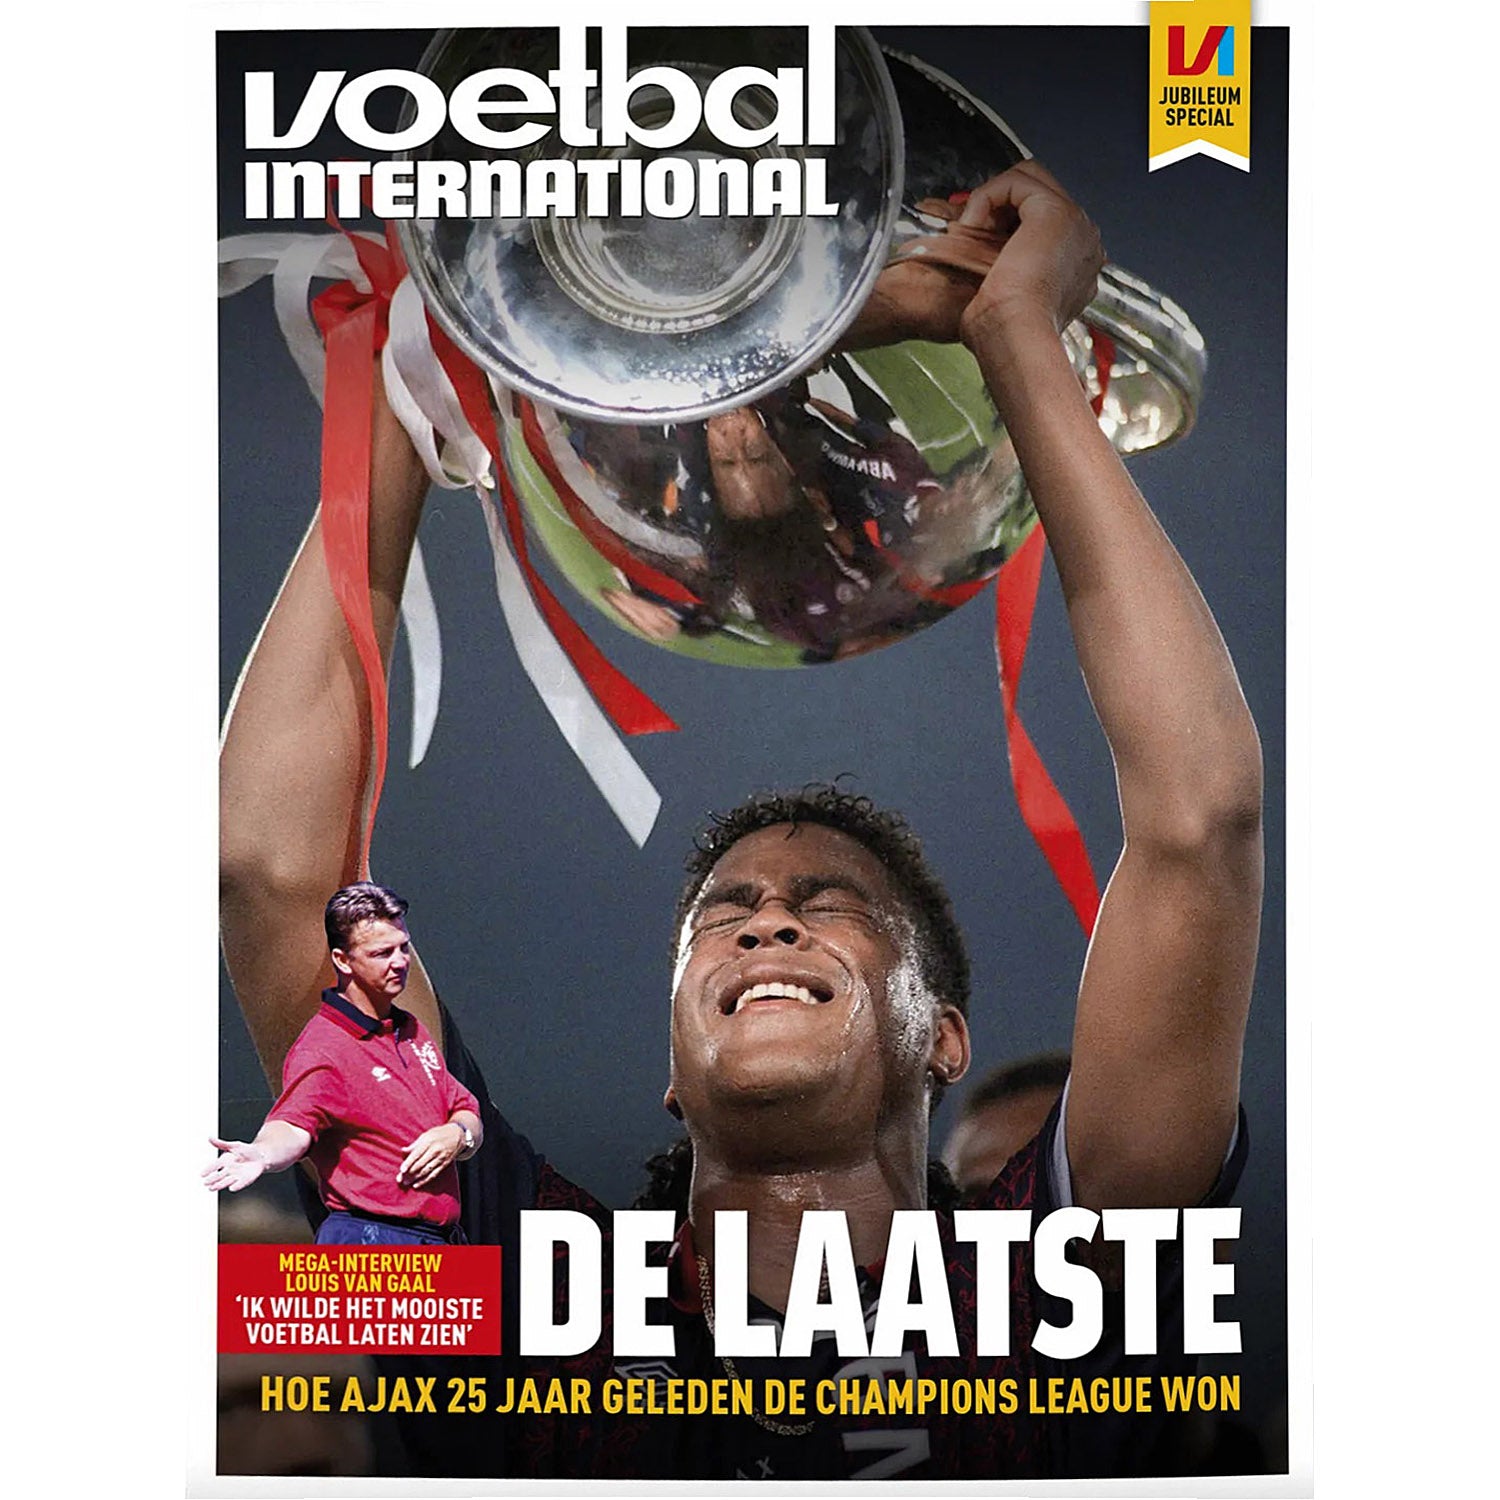 Voetbal International Special – De Laatste (Ajax 25 Year Champions League Anniversary Celebration)